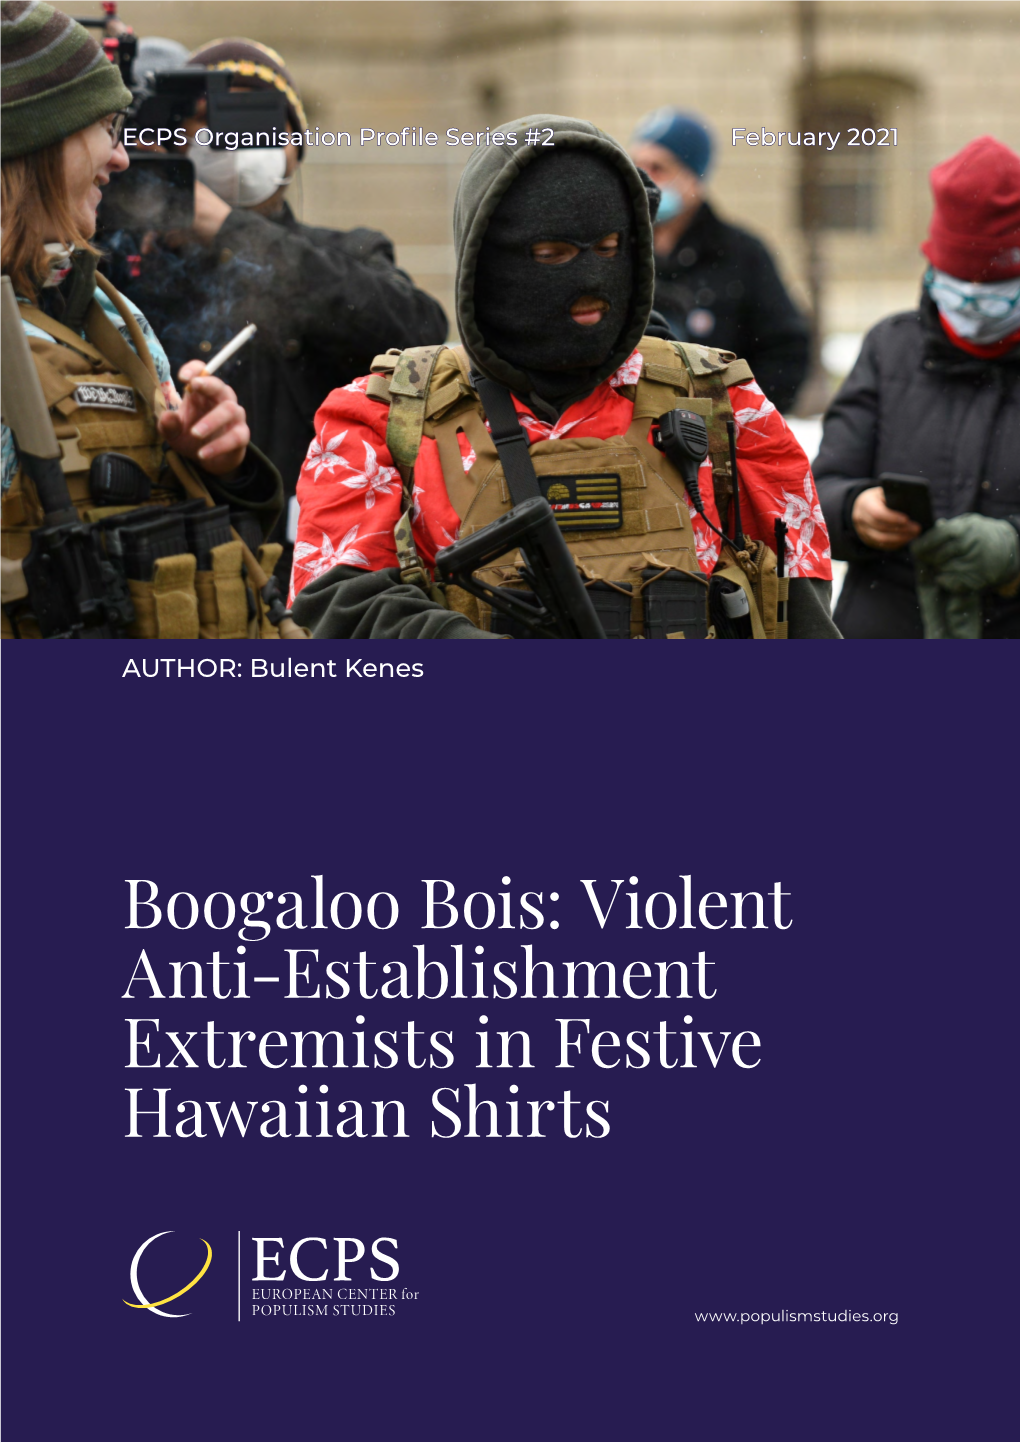 Boogaloo Bois: Violent Anti-Establishment Extremists in Festive Hawaiian Shirts